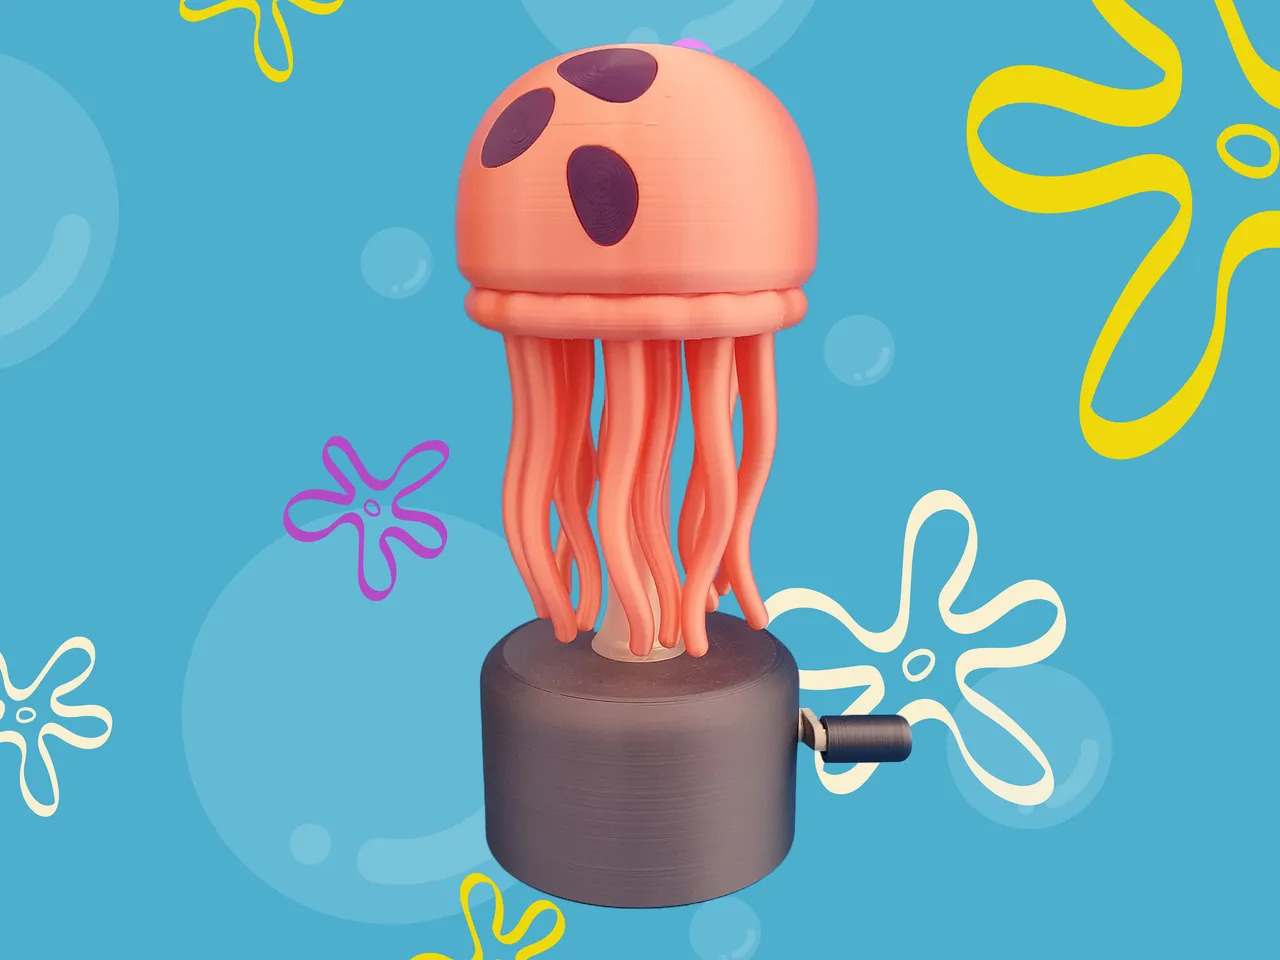 spongebob jellyfish png